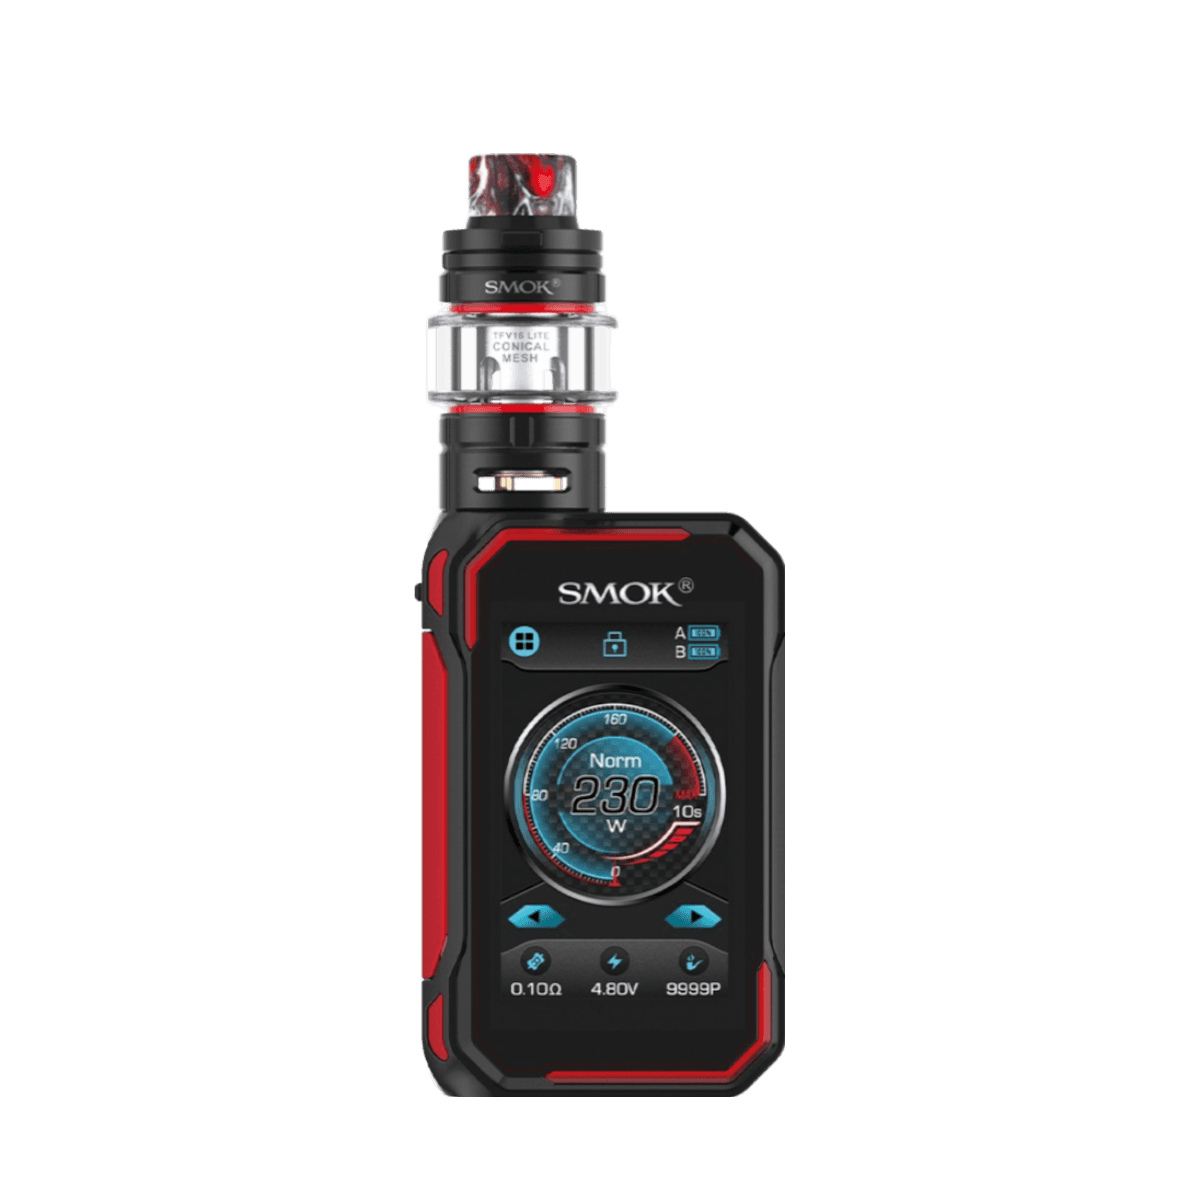 Smok G-Priv 3 Advanced Mod Kit Black  